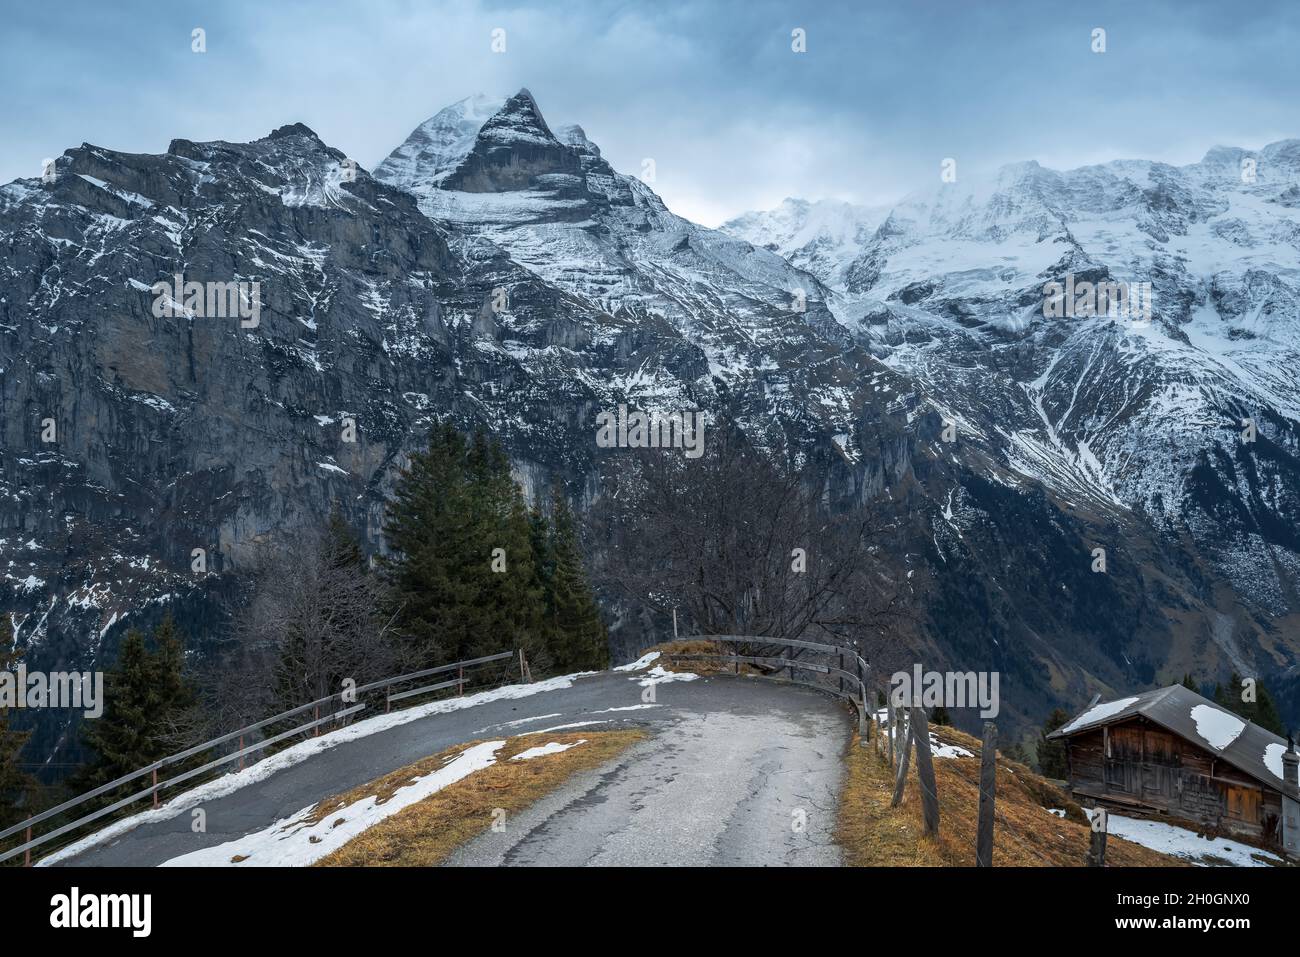 Road in Murren with Jungfrau Mountain on background - Silberhorn and Schwarz Monch parts - Murren, Switzerland Stock Photo